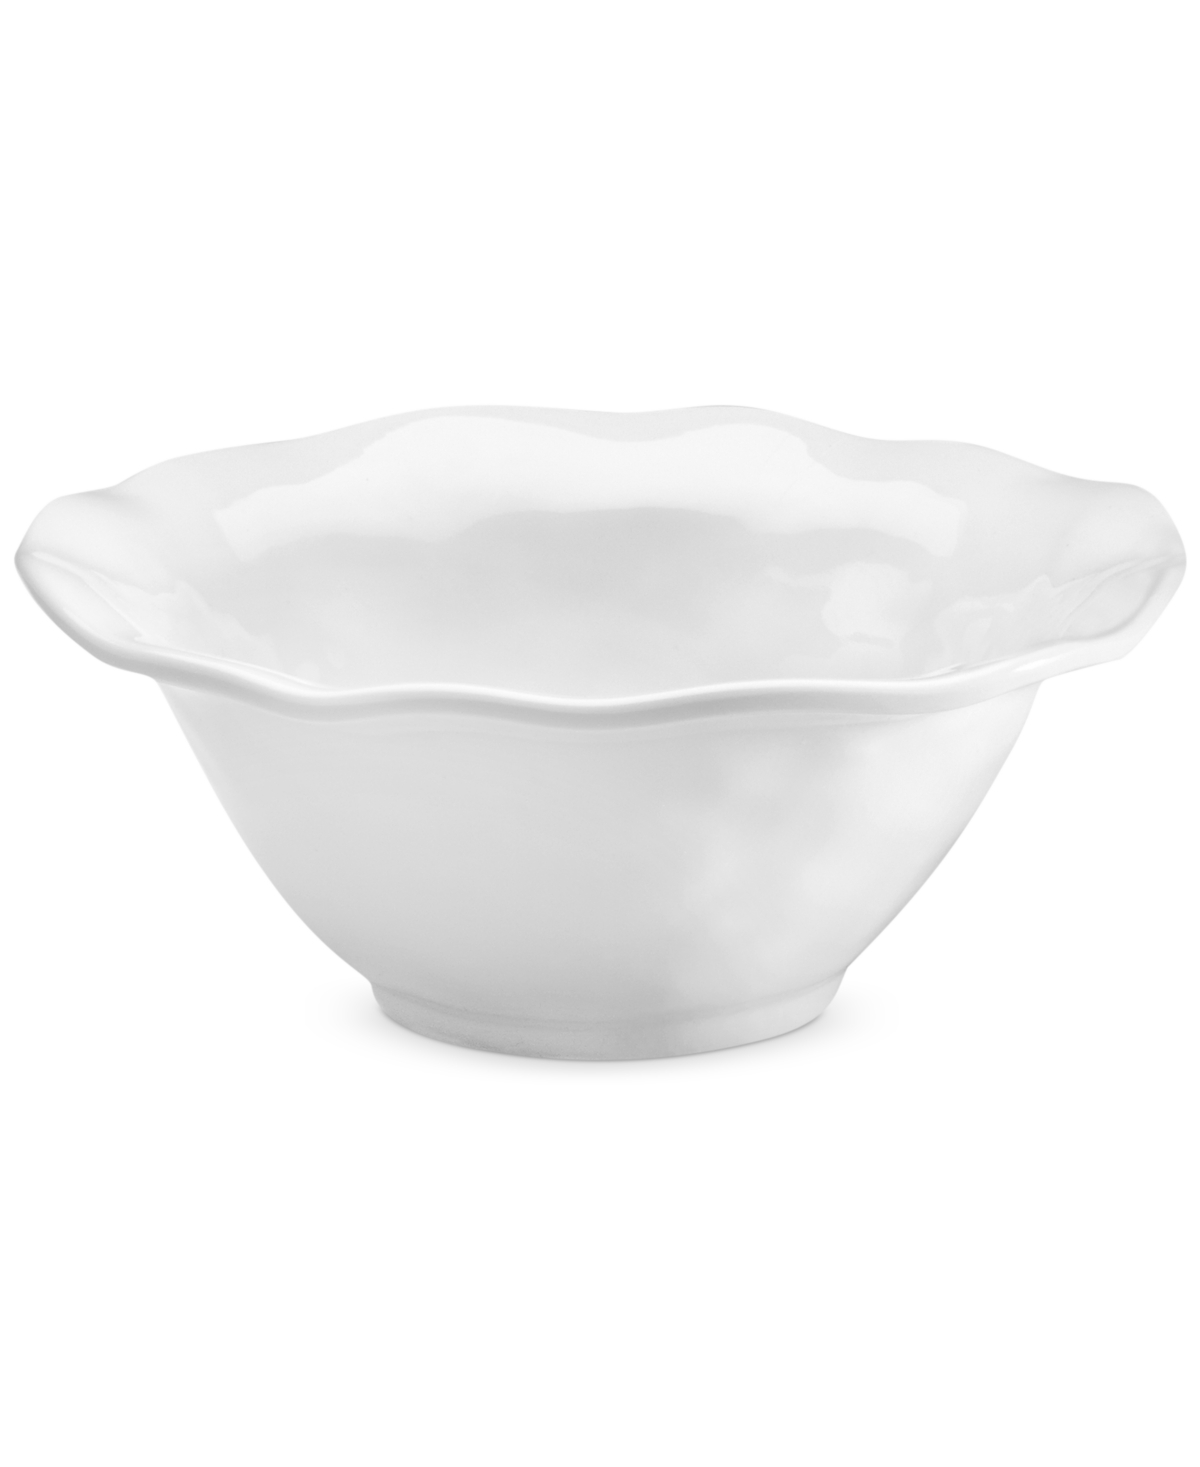 Ruffle White Melamine Cereal Bowl, Set of 4 - WHITE